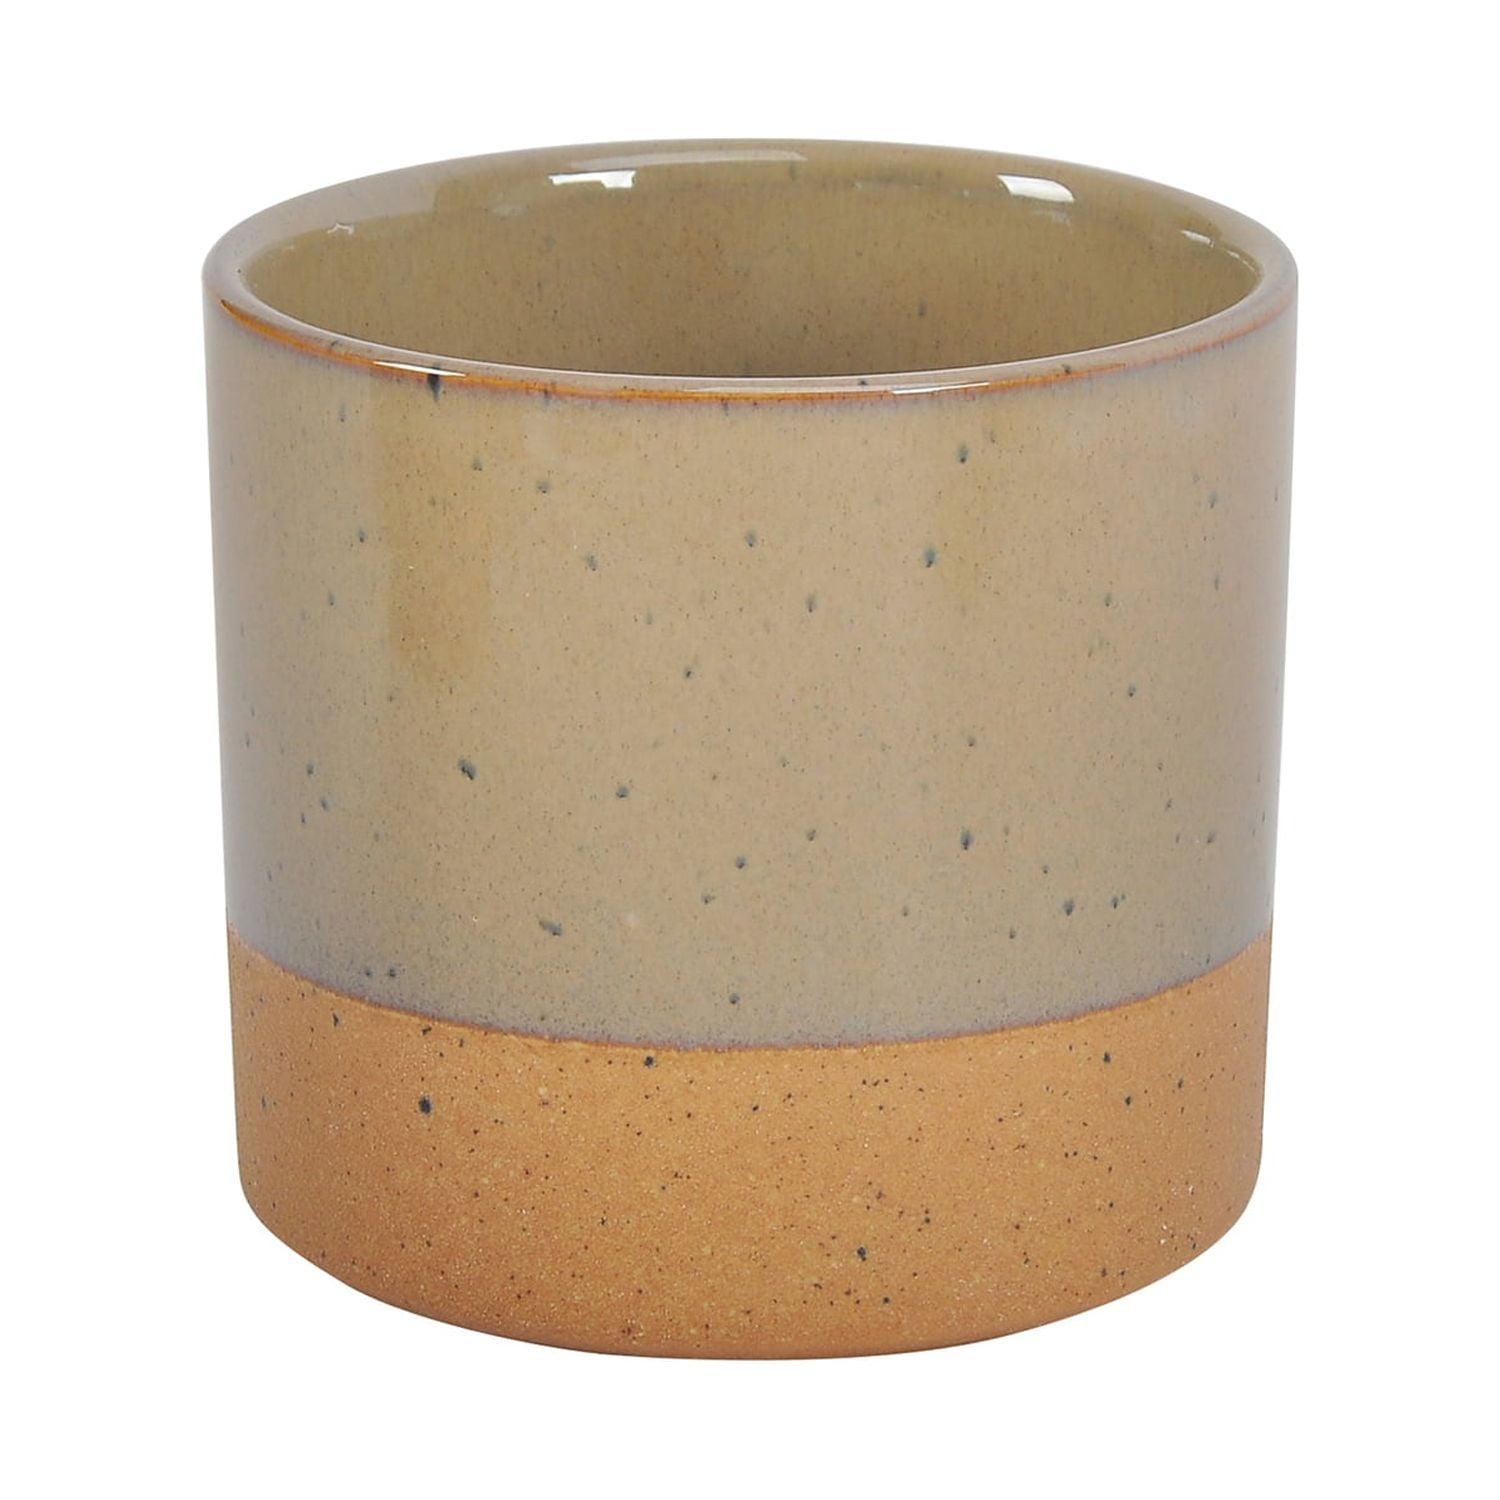 Rustica Speckled Brown Ceramic 6.5" Indoor/Outdoor Planter